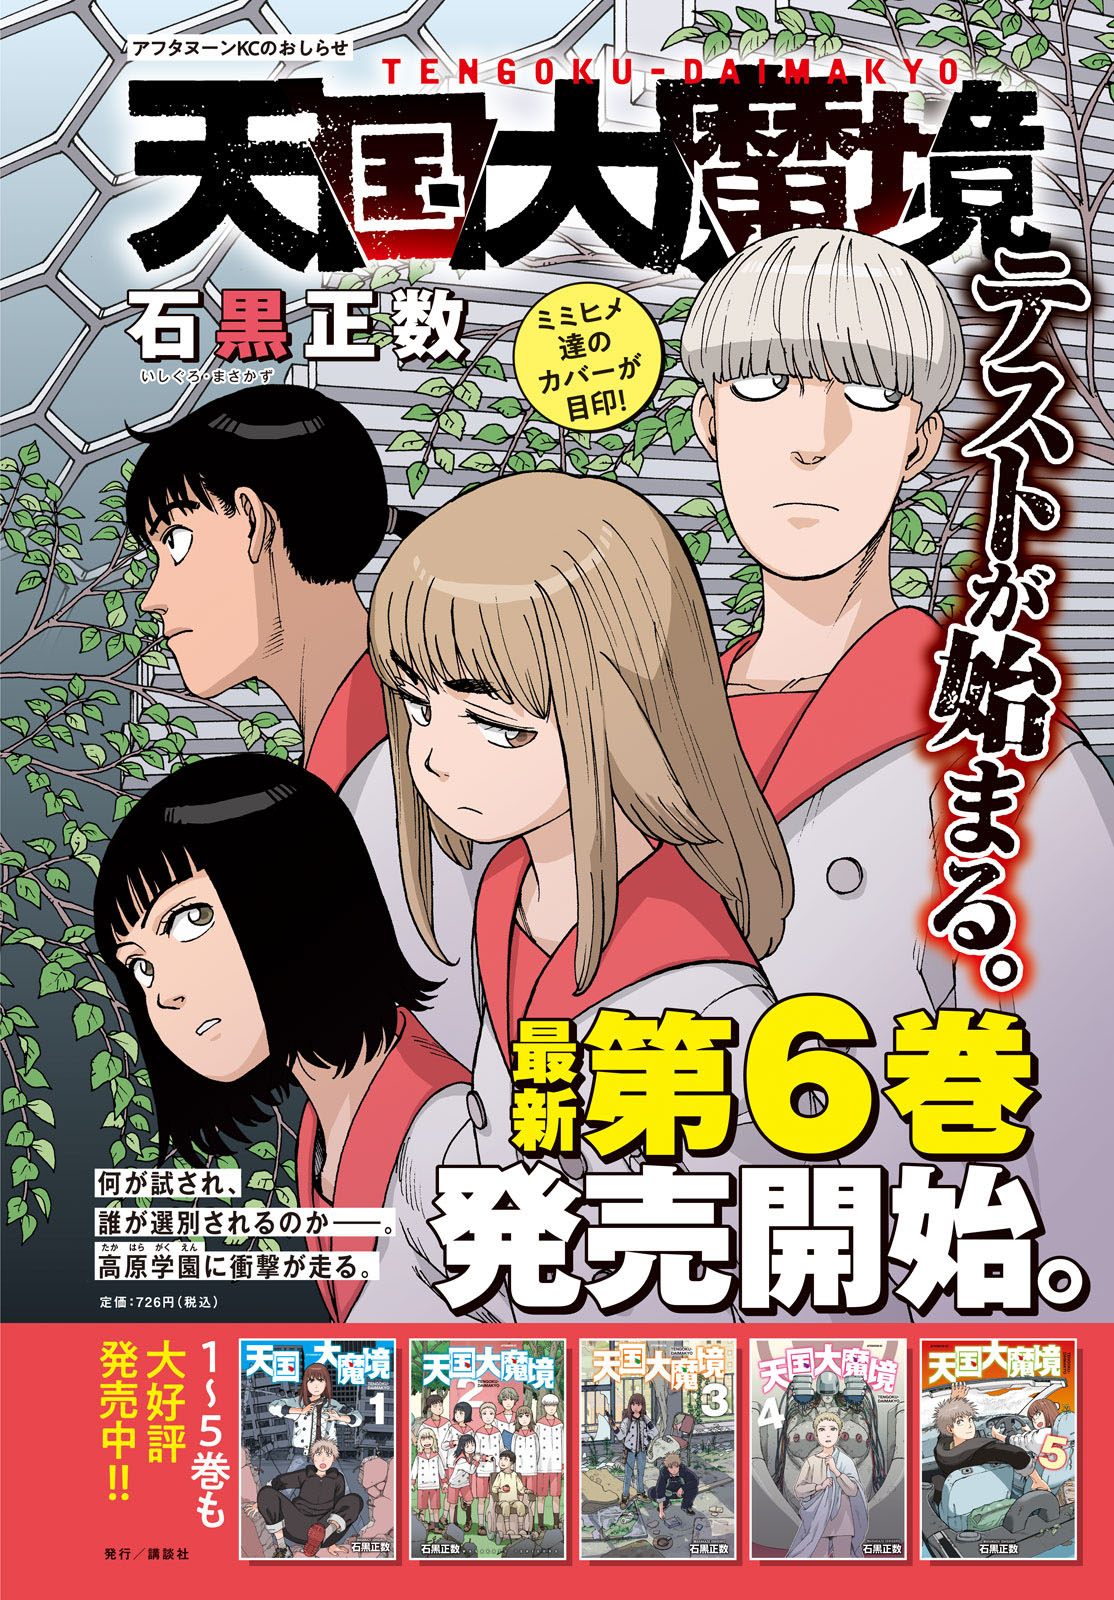 Tengoku Daimakyou Capítulo 11 - Manga Online